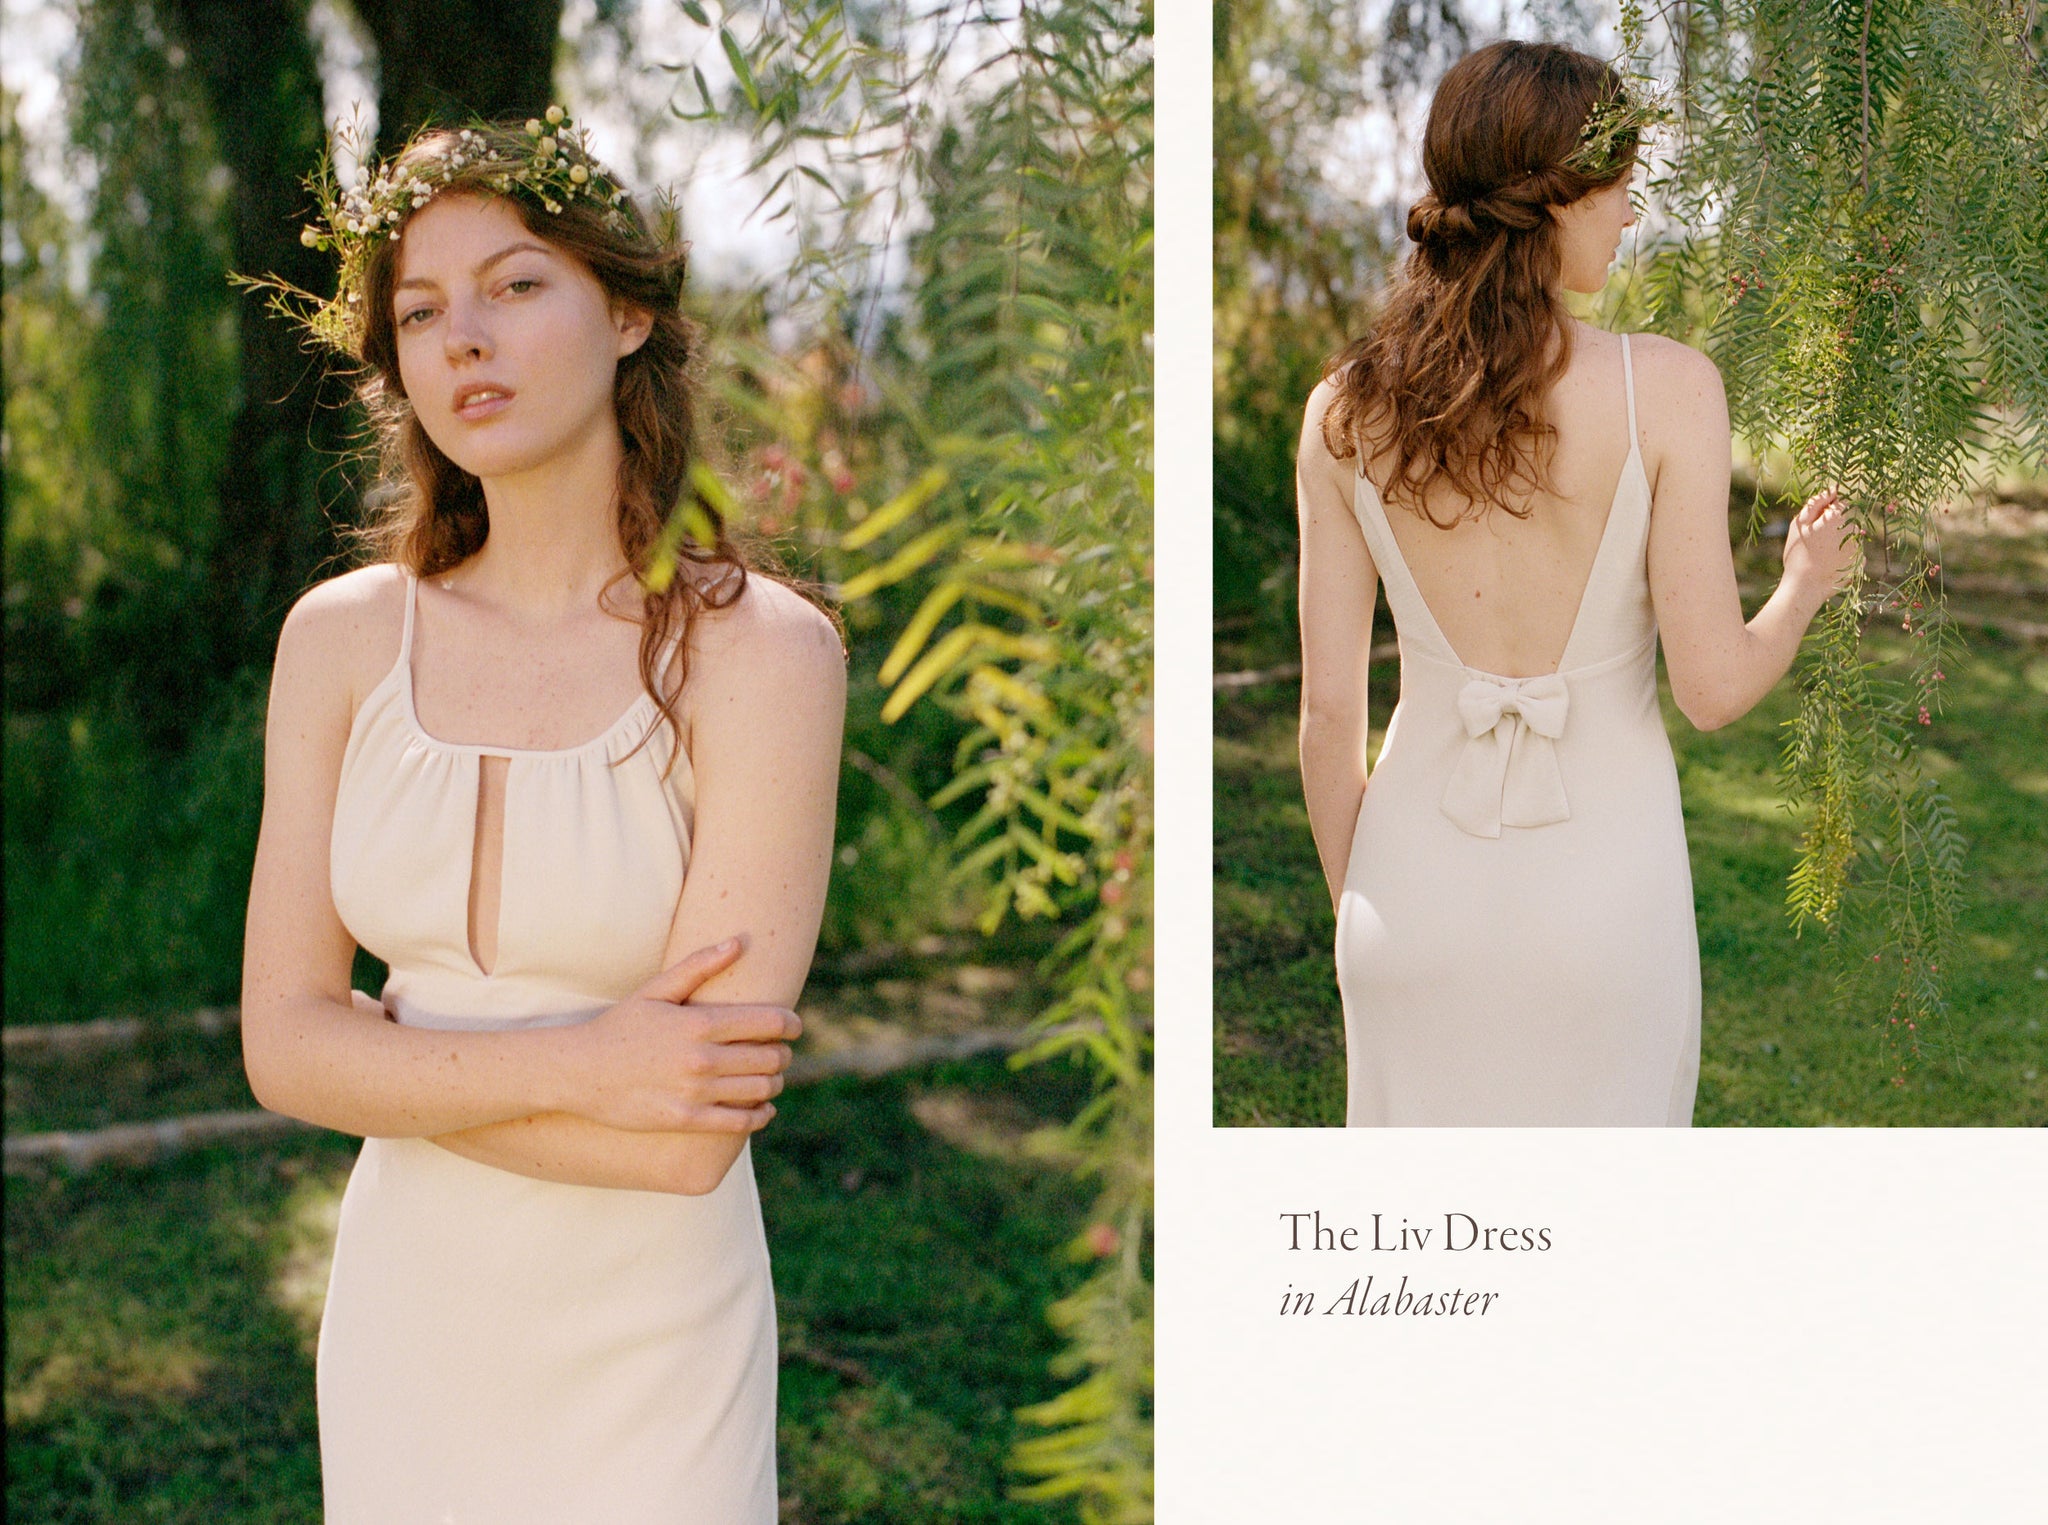 The Liv Dress in Alabaster